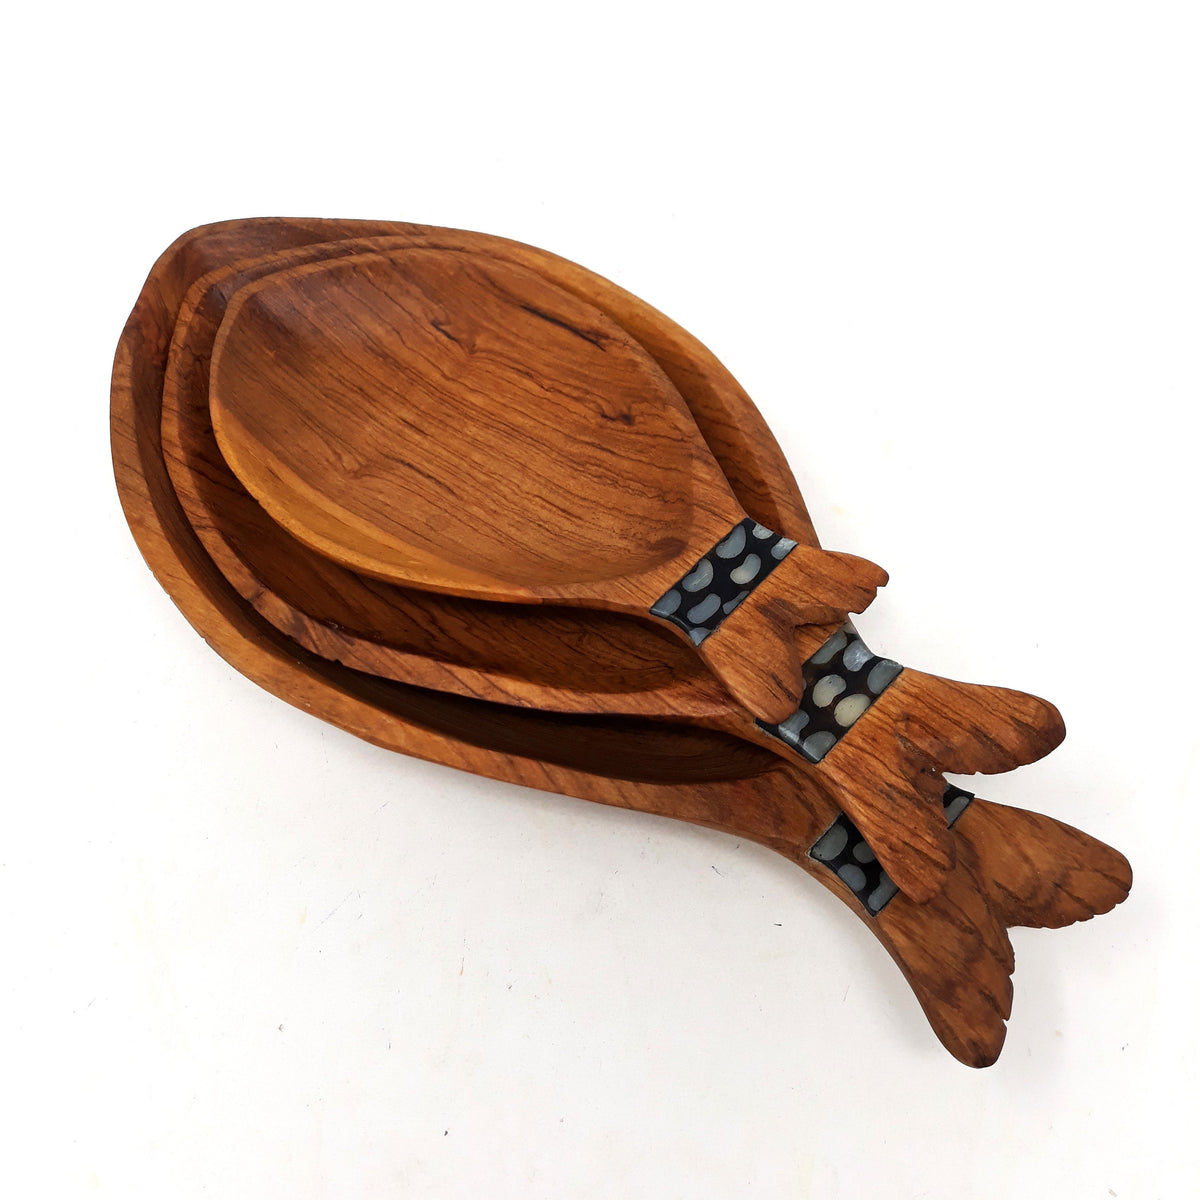 Wooden bowl set, Handmade wooden bowls, set of 3 wooden bowls, Olivewood bowls, Farmhouse wood bowl, wooden snack bowls, set of wood bowls,